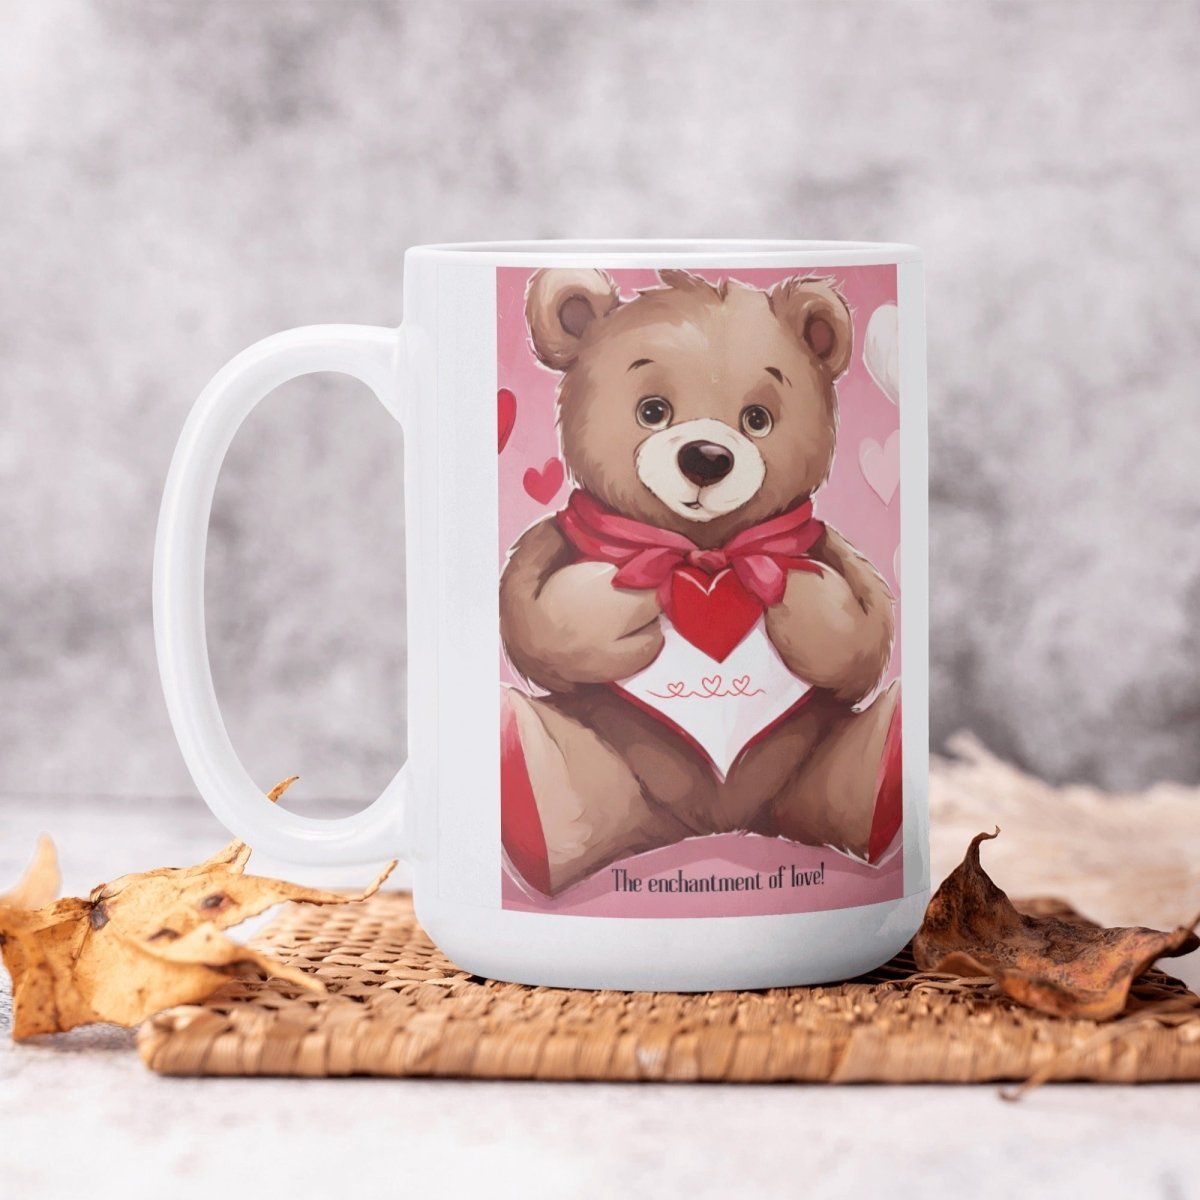 15 oz Glossy Custom coffee Mug  with Adorable Teddy Bear Design - Iron Phoenix GHG